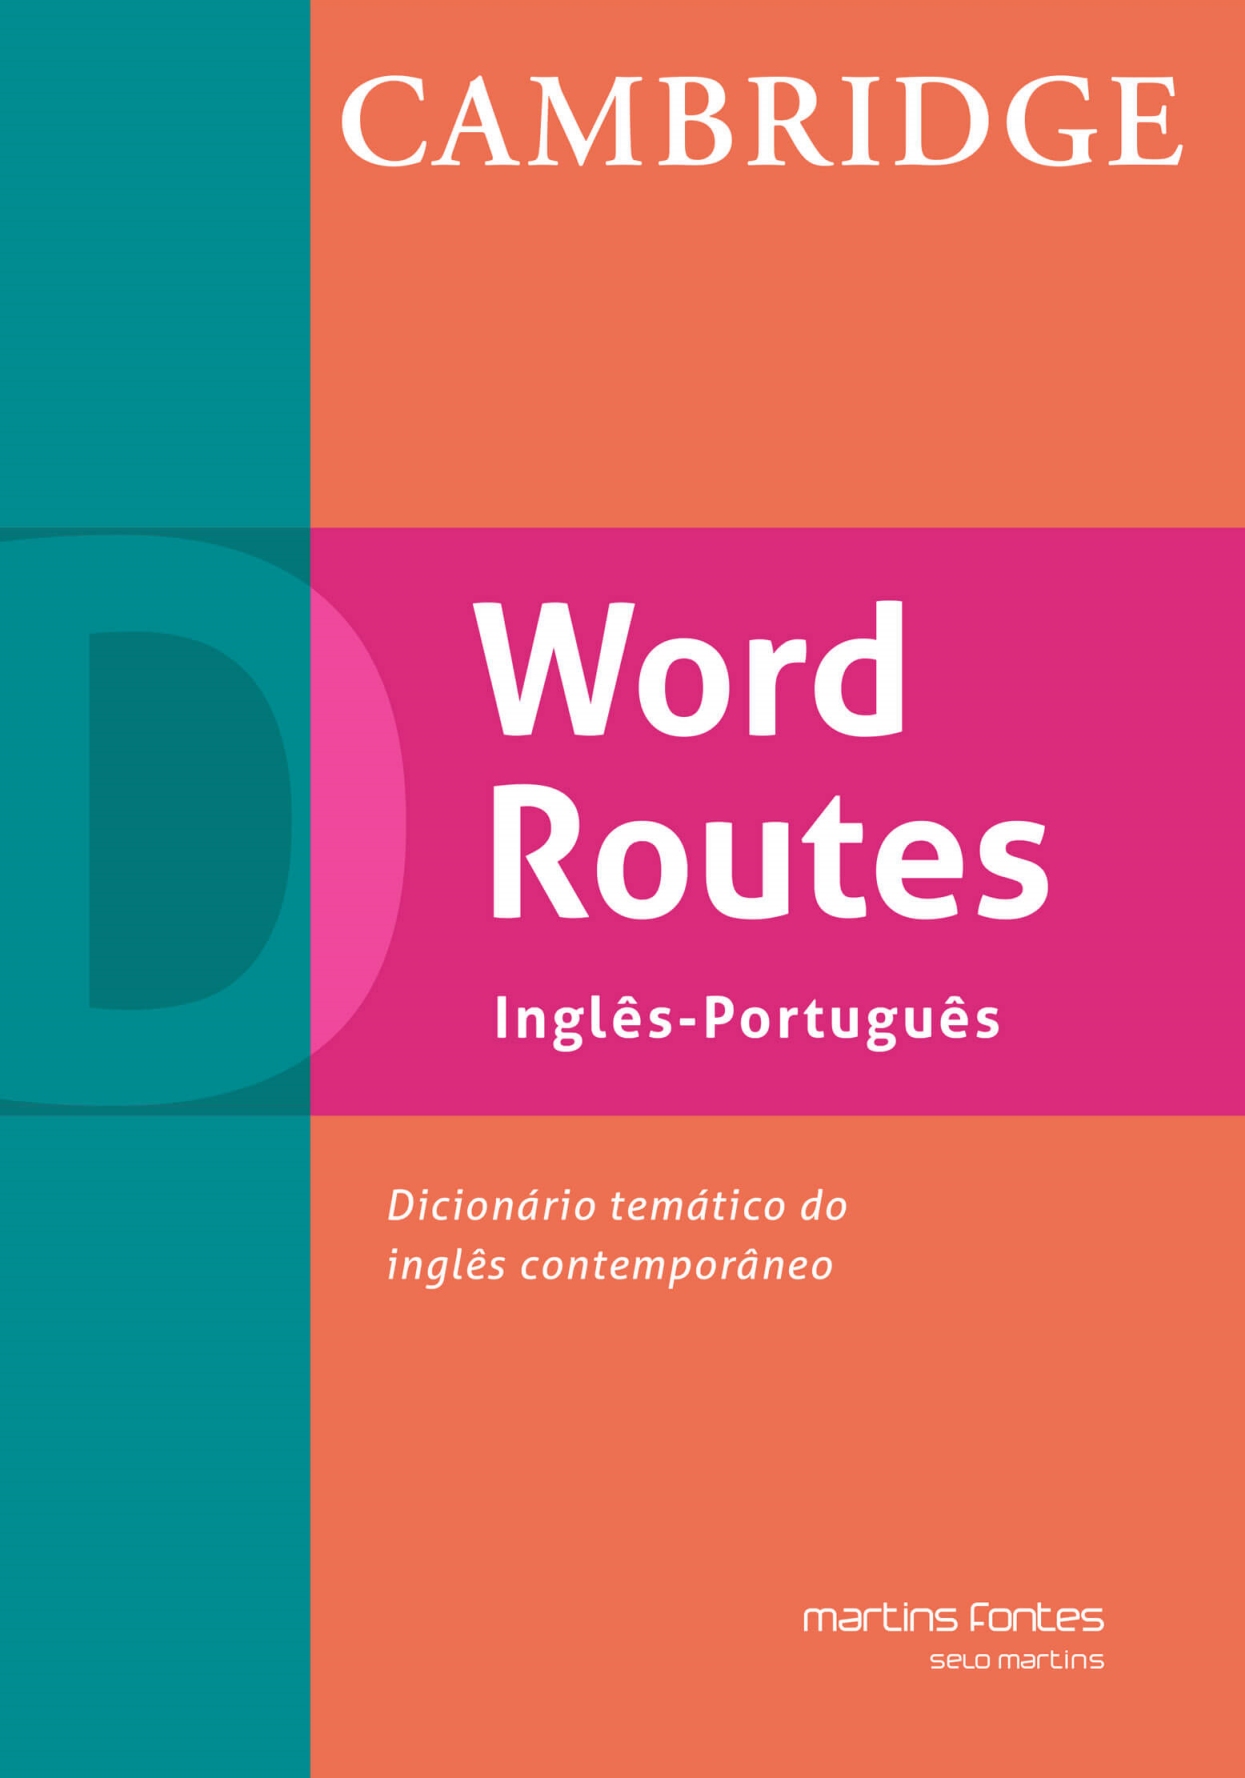 Word Routes - Inglês-Português  - Martins Fontes